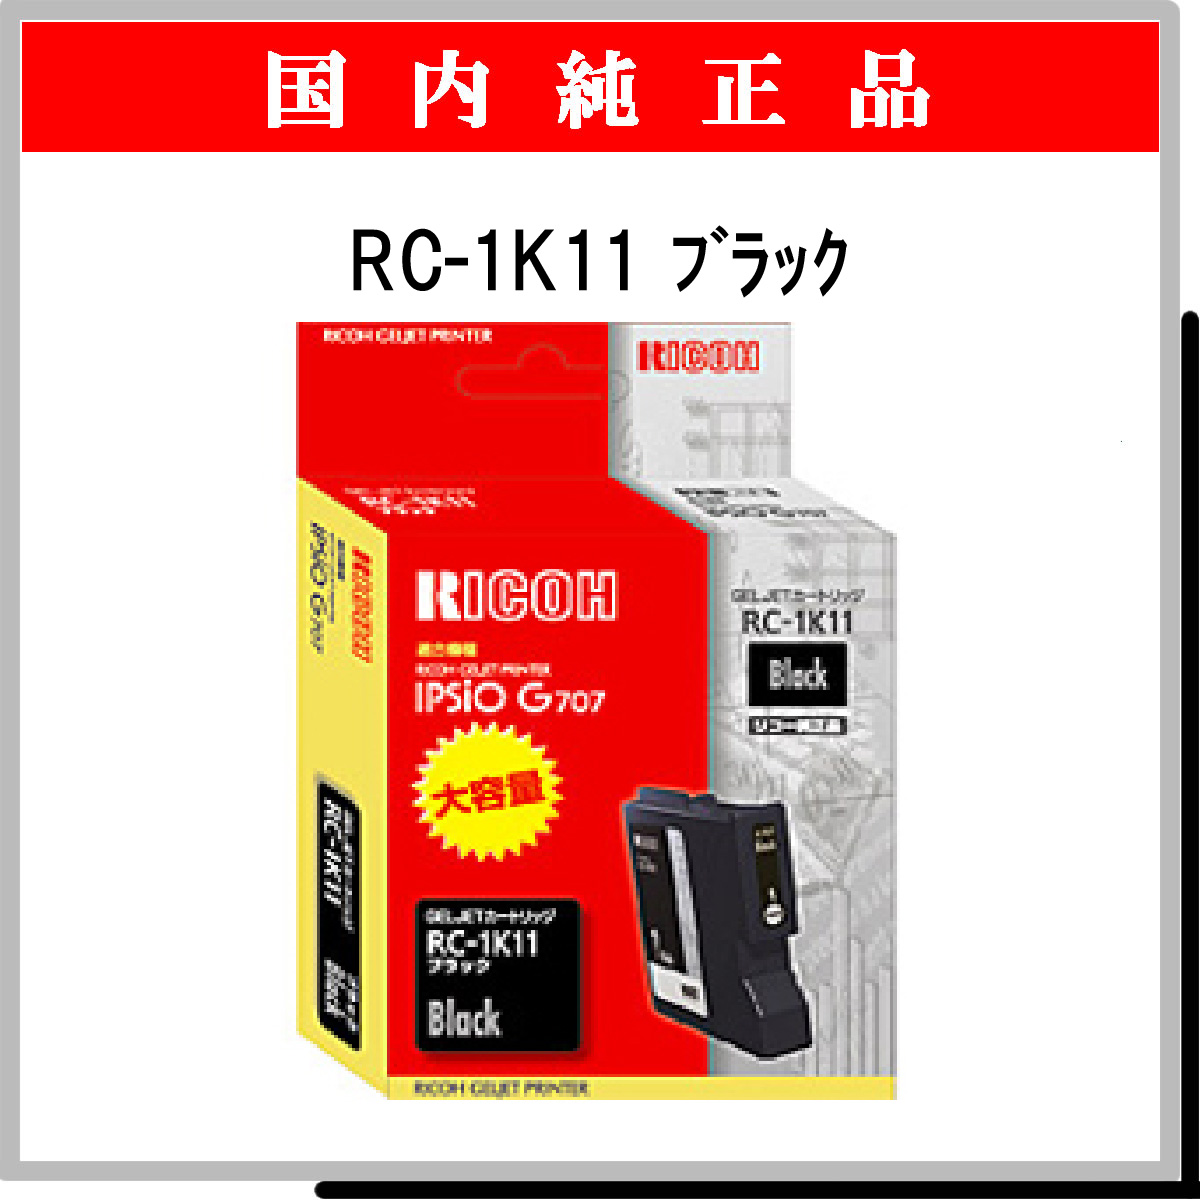 RC-1K11 純正